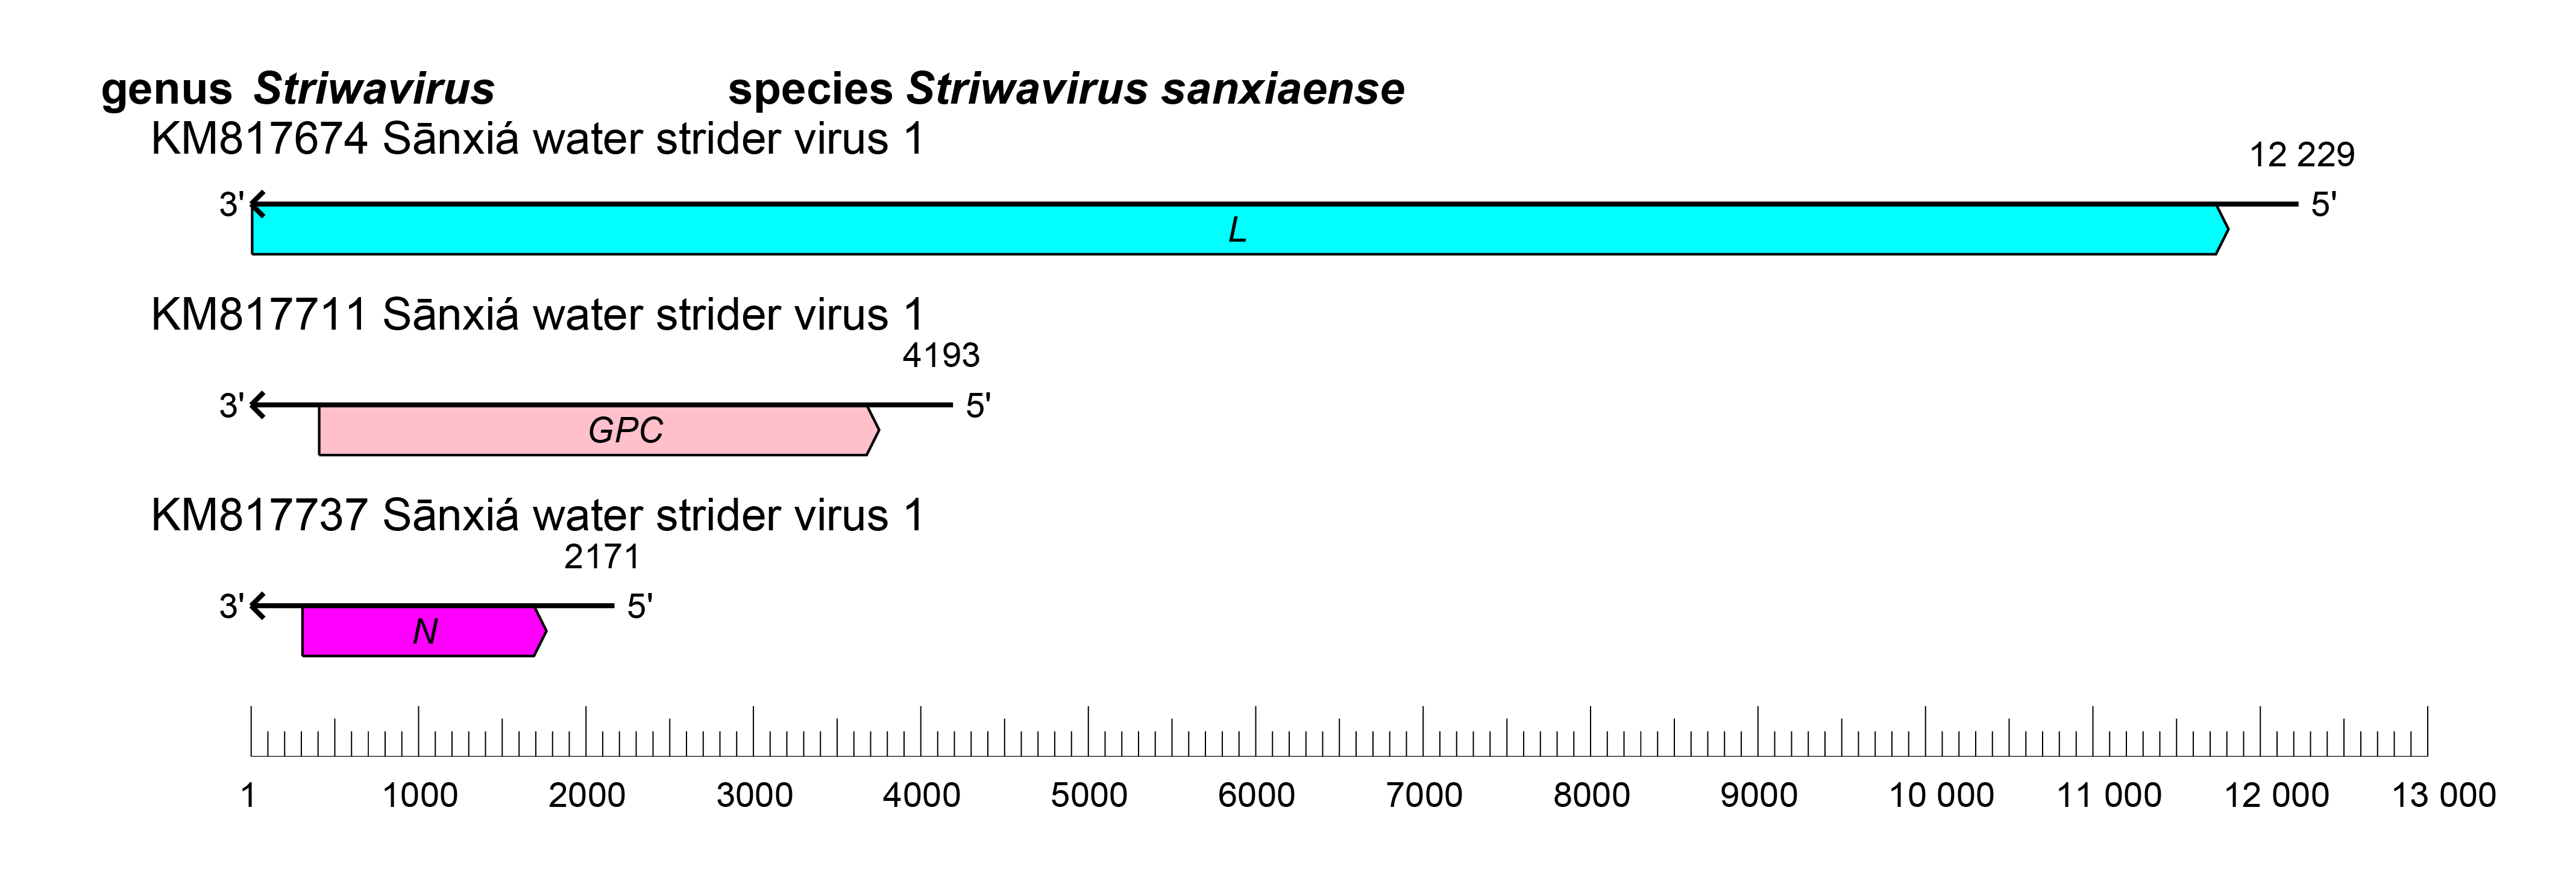 Striwavirus genome